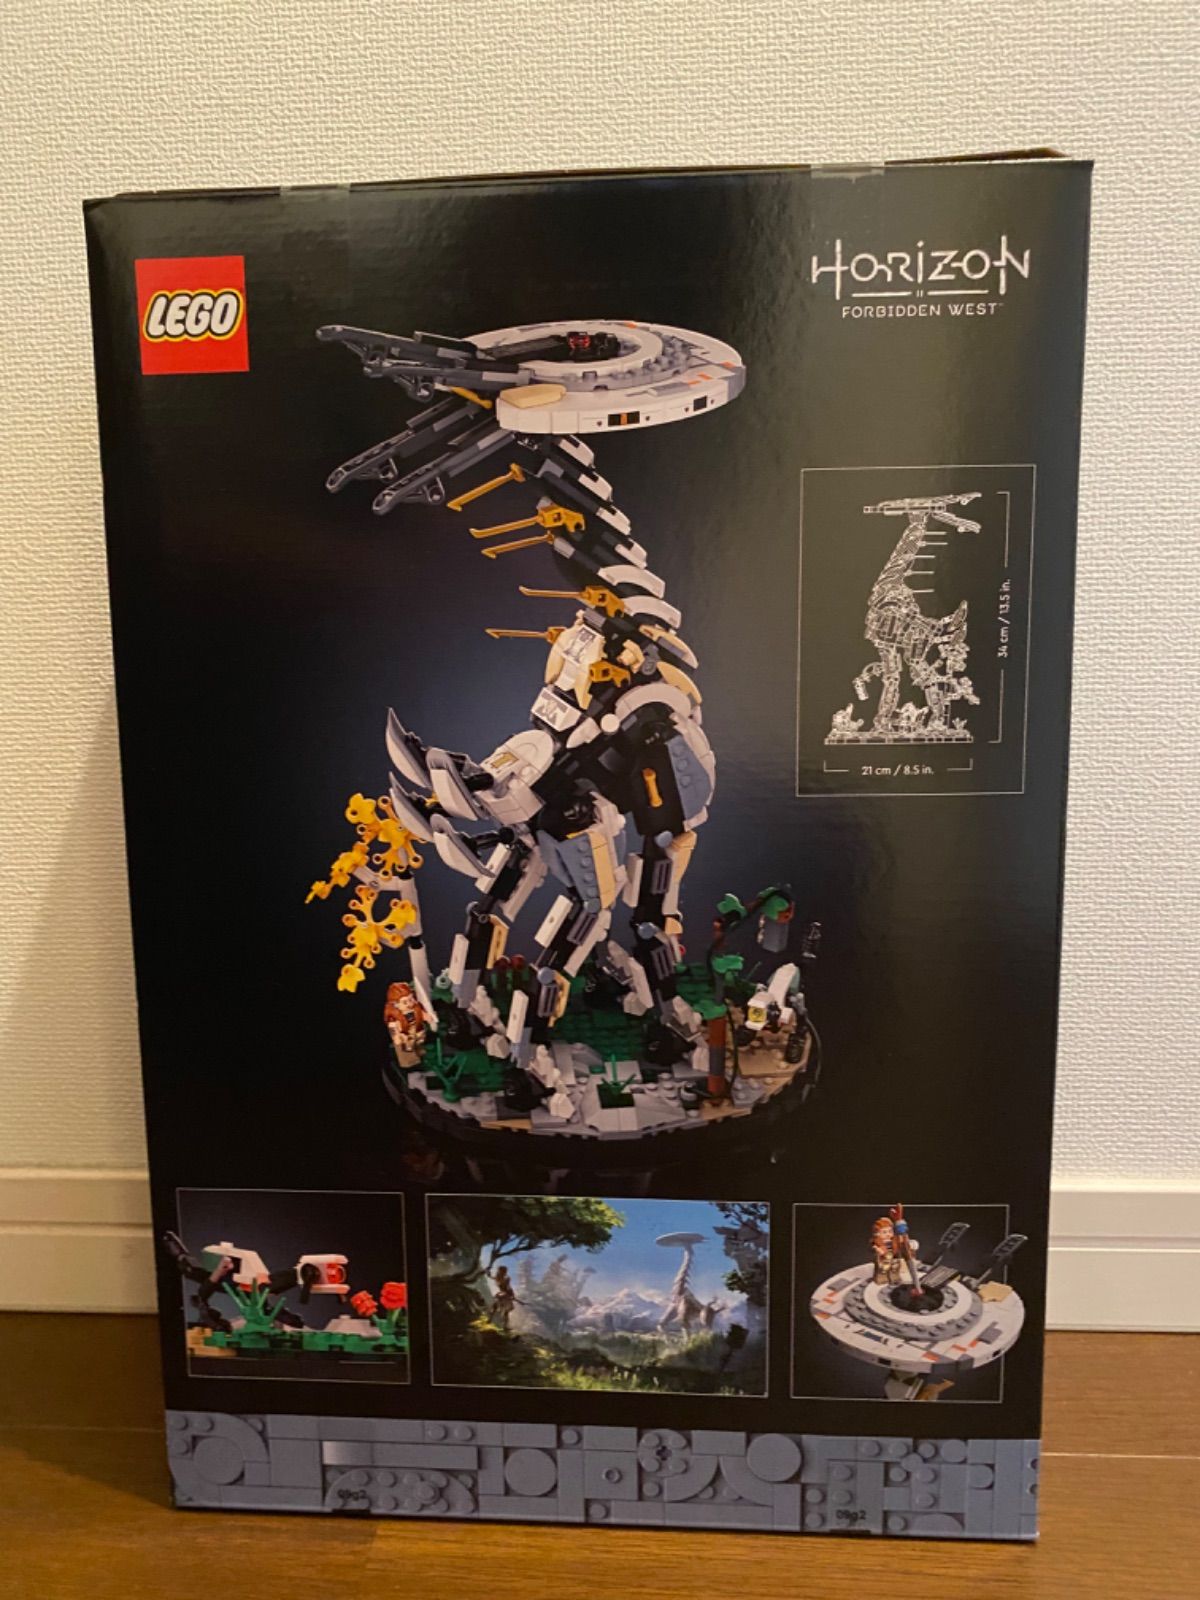 LEGO レゴ ホライゾン トールネック 76989 新品未開封 - marocoro